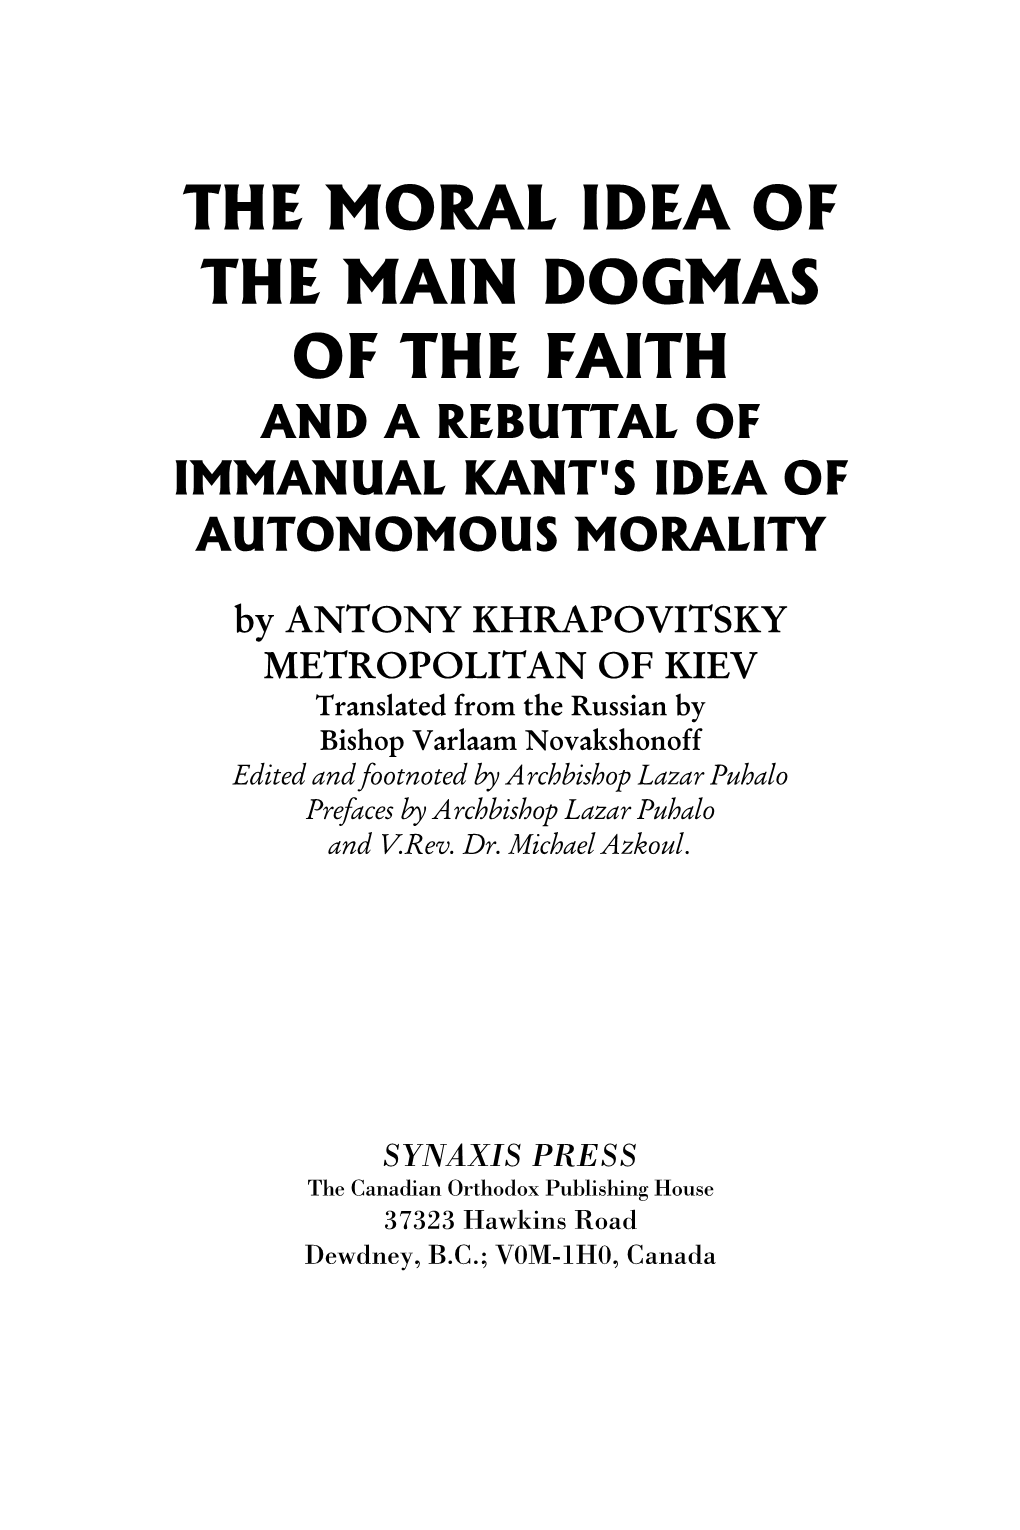 The Moral Idea of the Main Dogmas of the Faith and a Rebuttal of Immanual Kant's Idea of Autonomous Morality